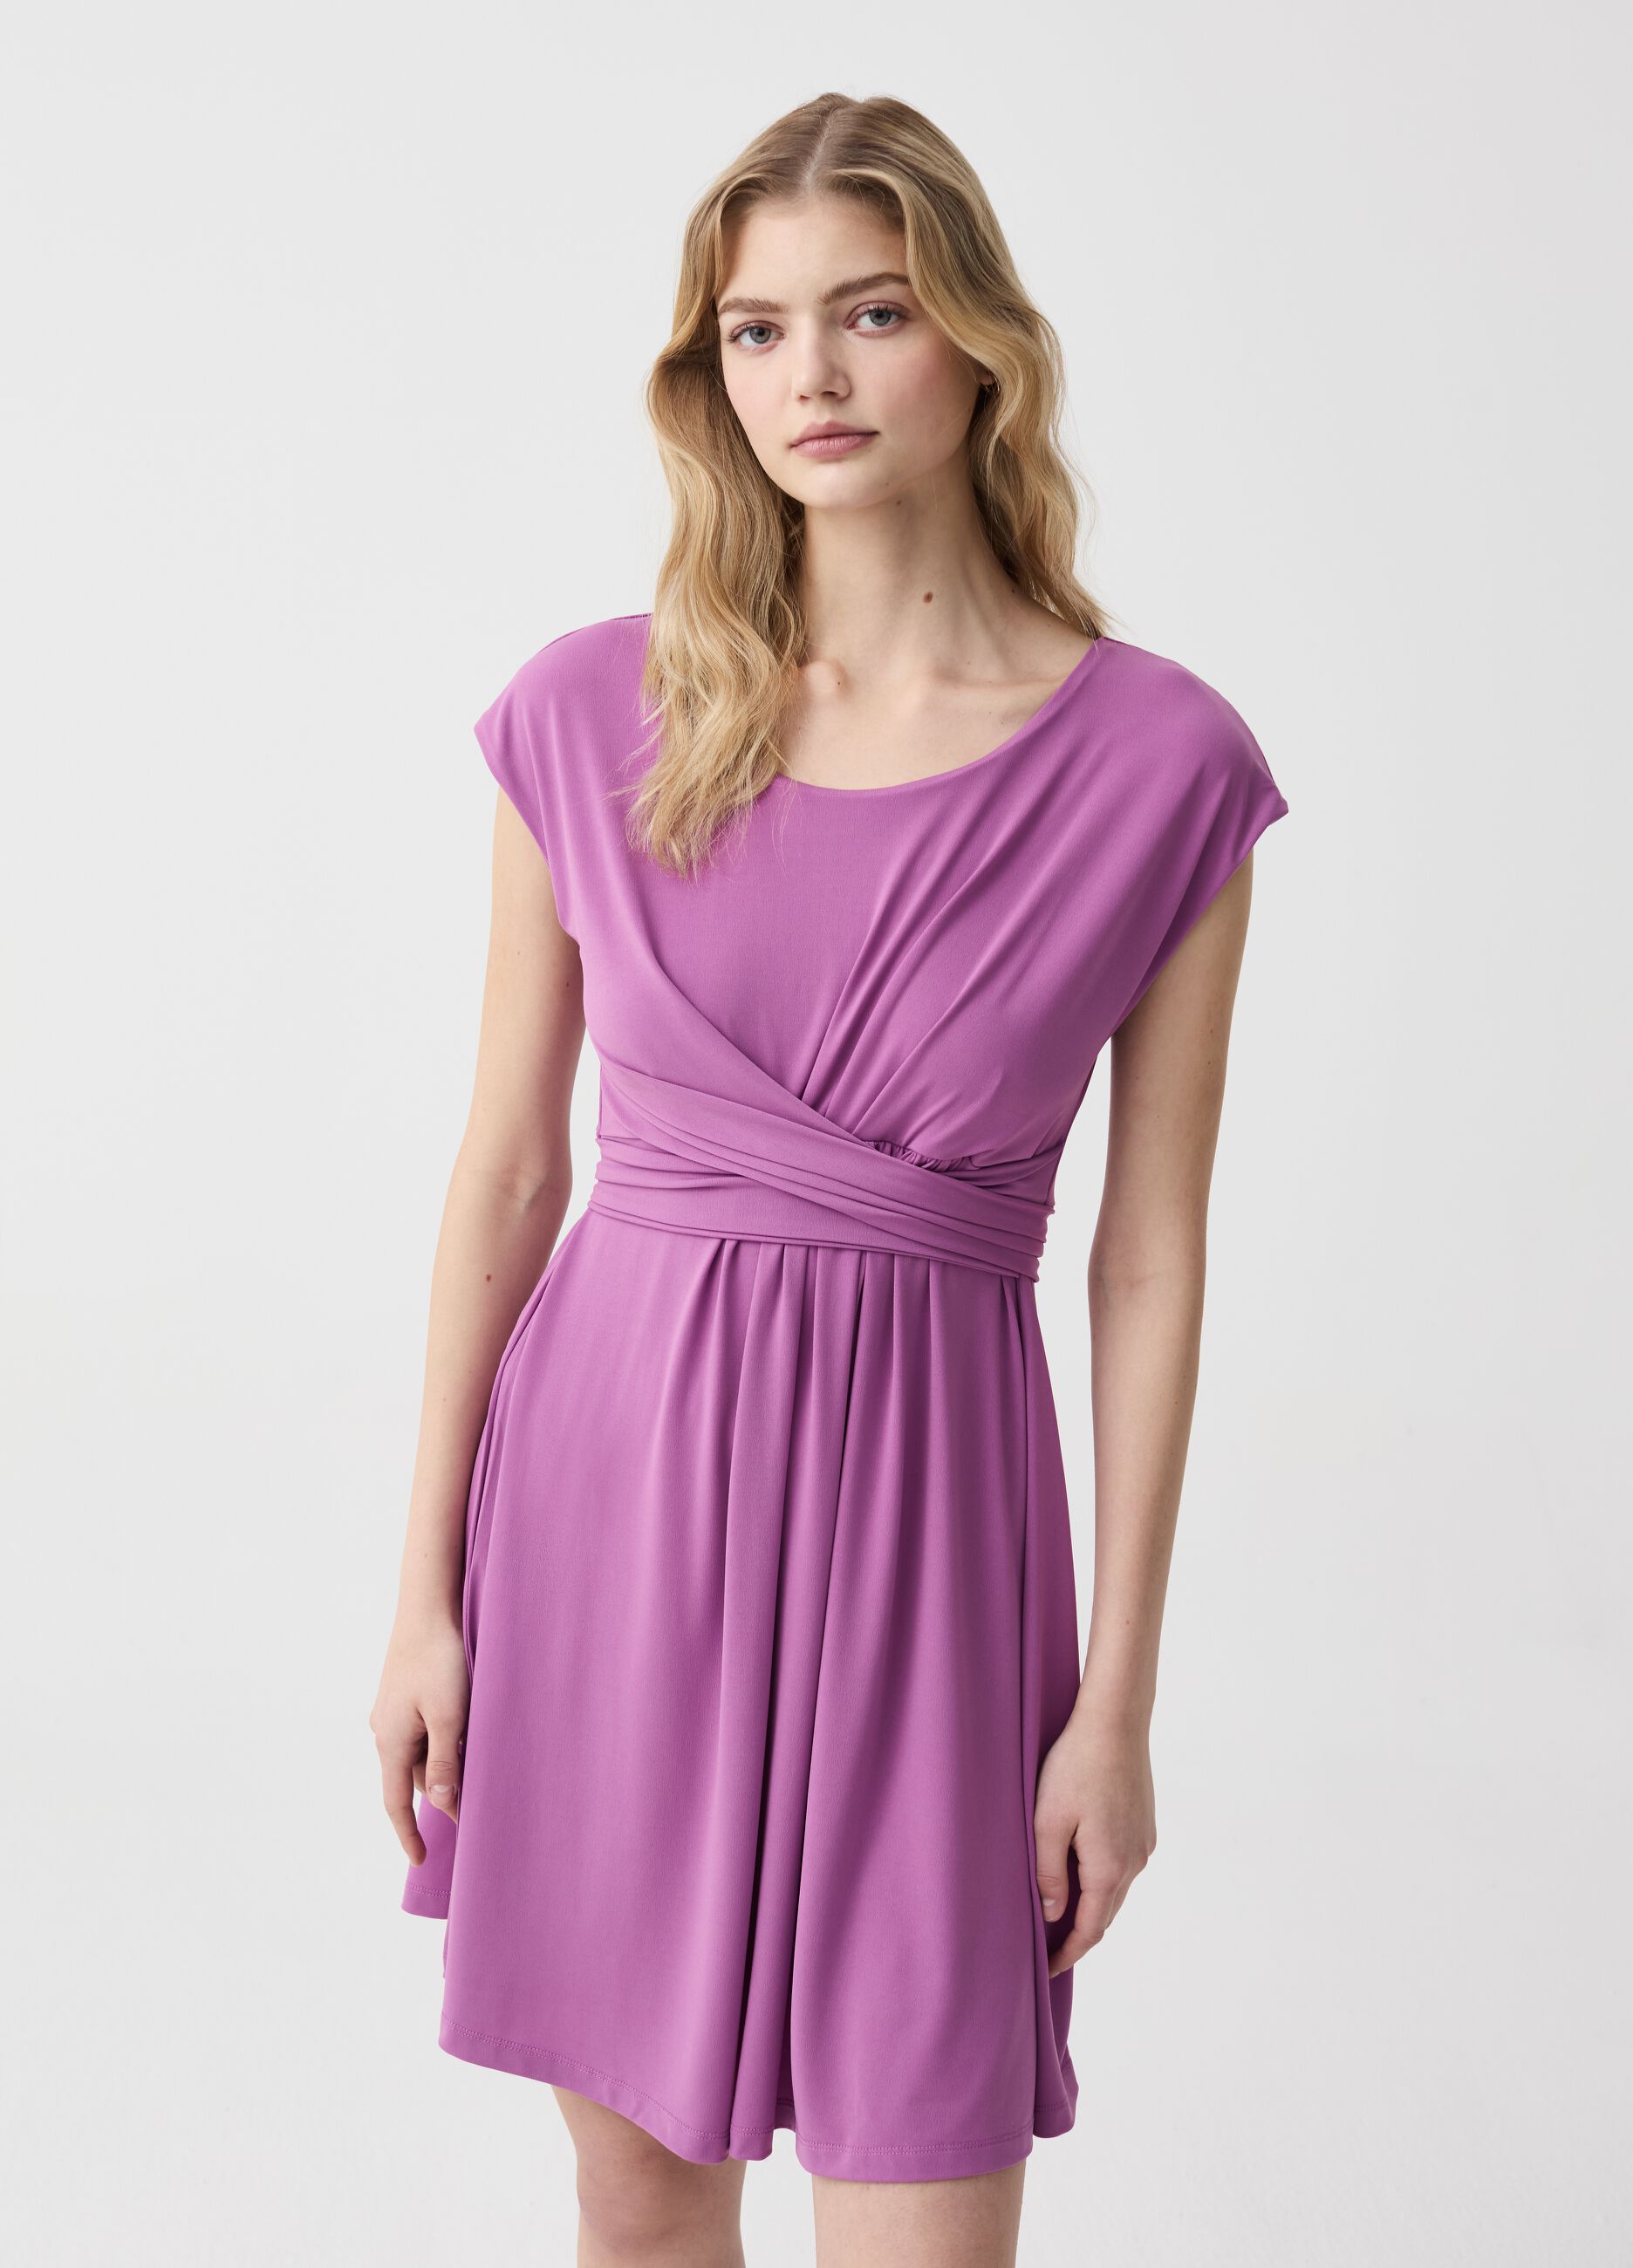 Solid colour sleeveless maternity dress